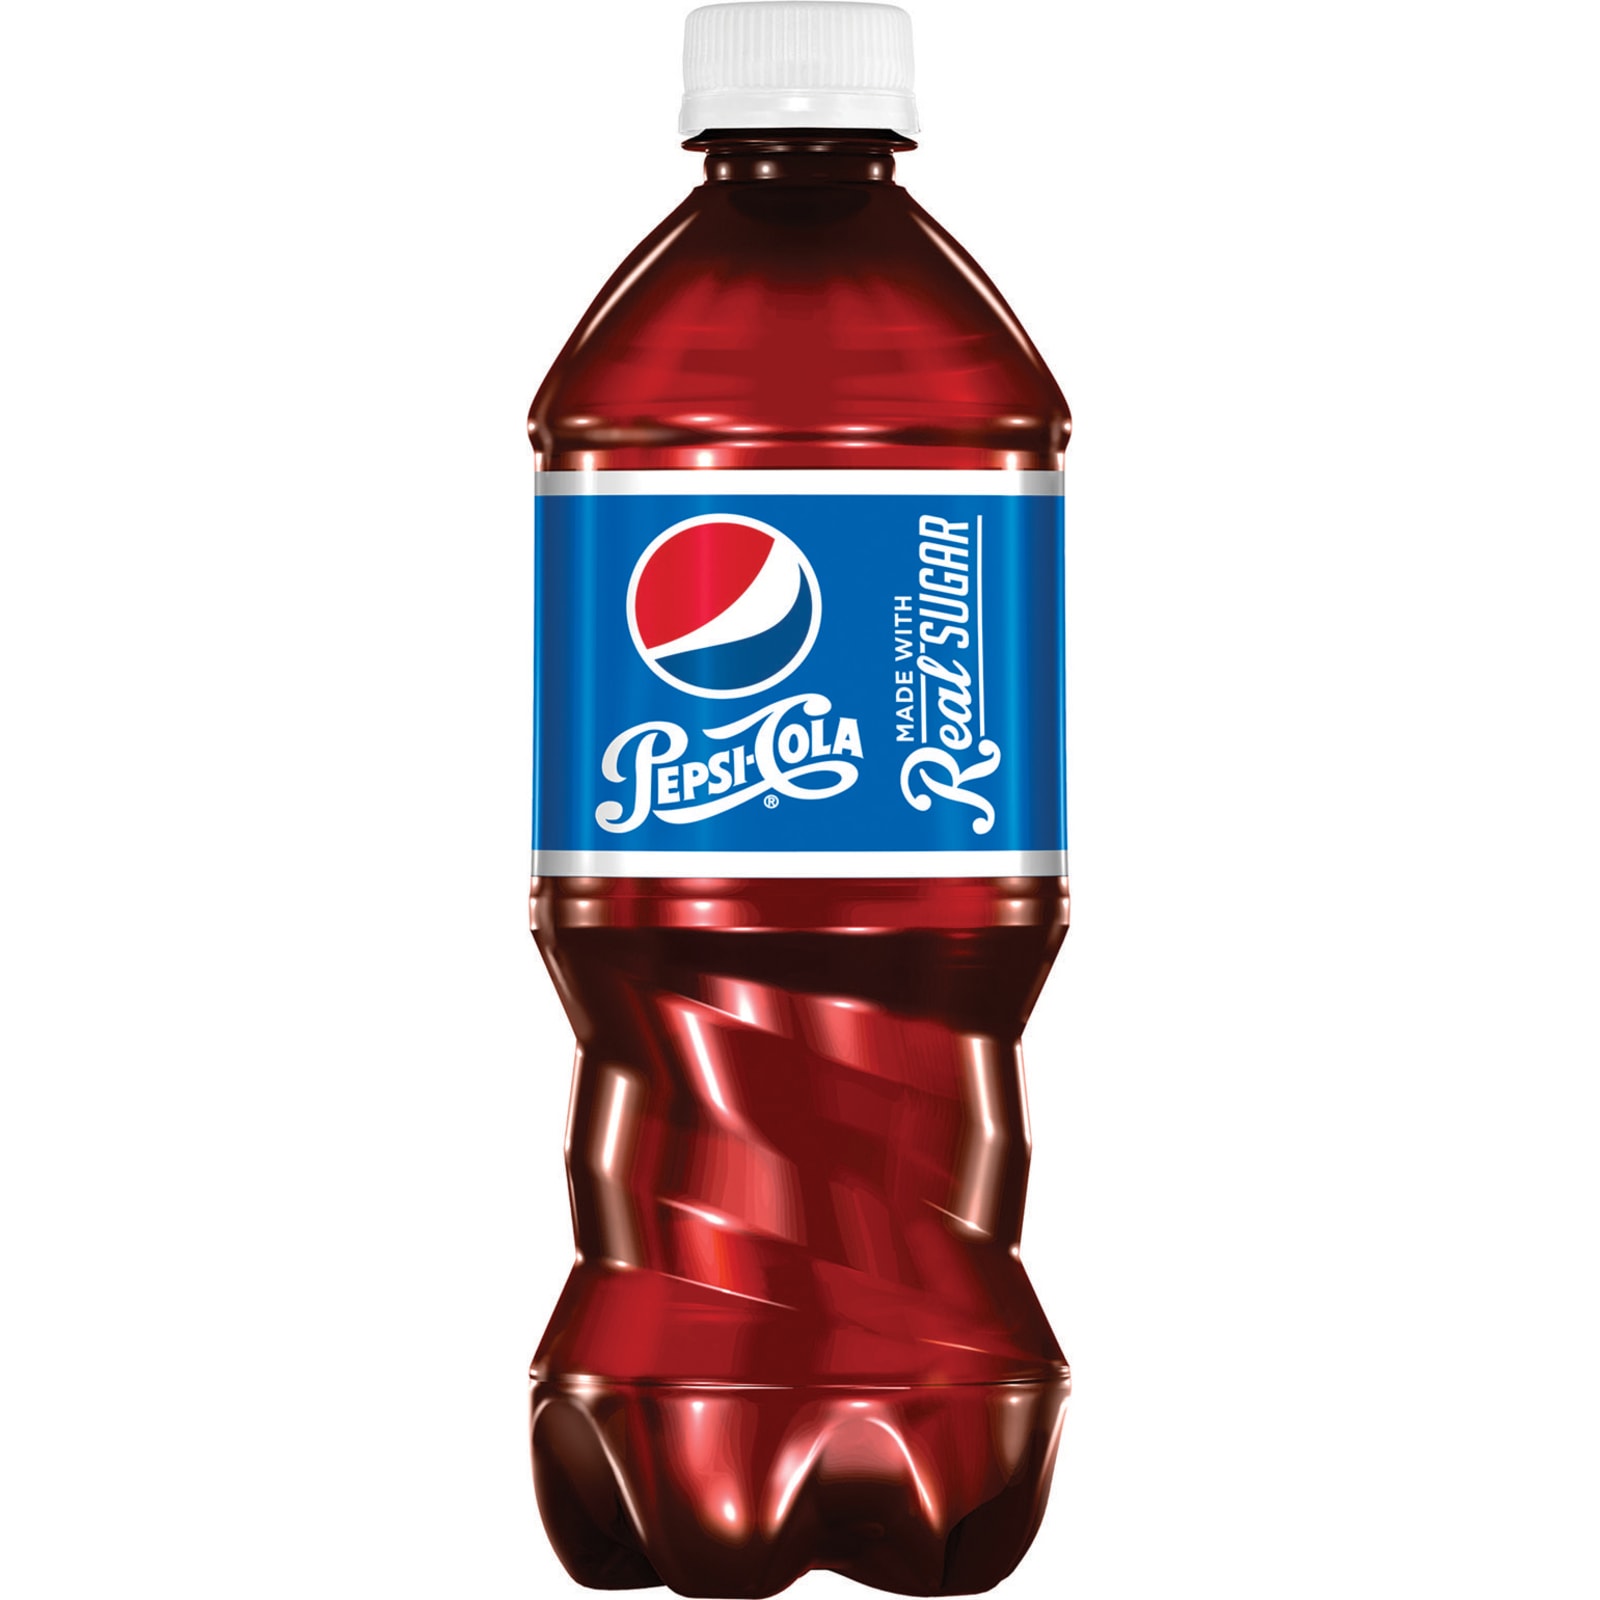 Pepsi Zero Sugar, 20 Oz, Cola